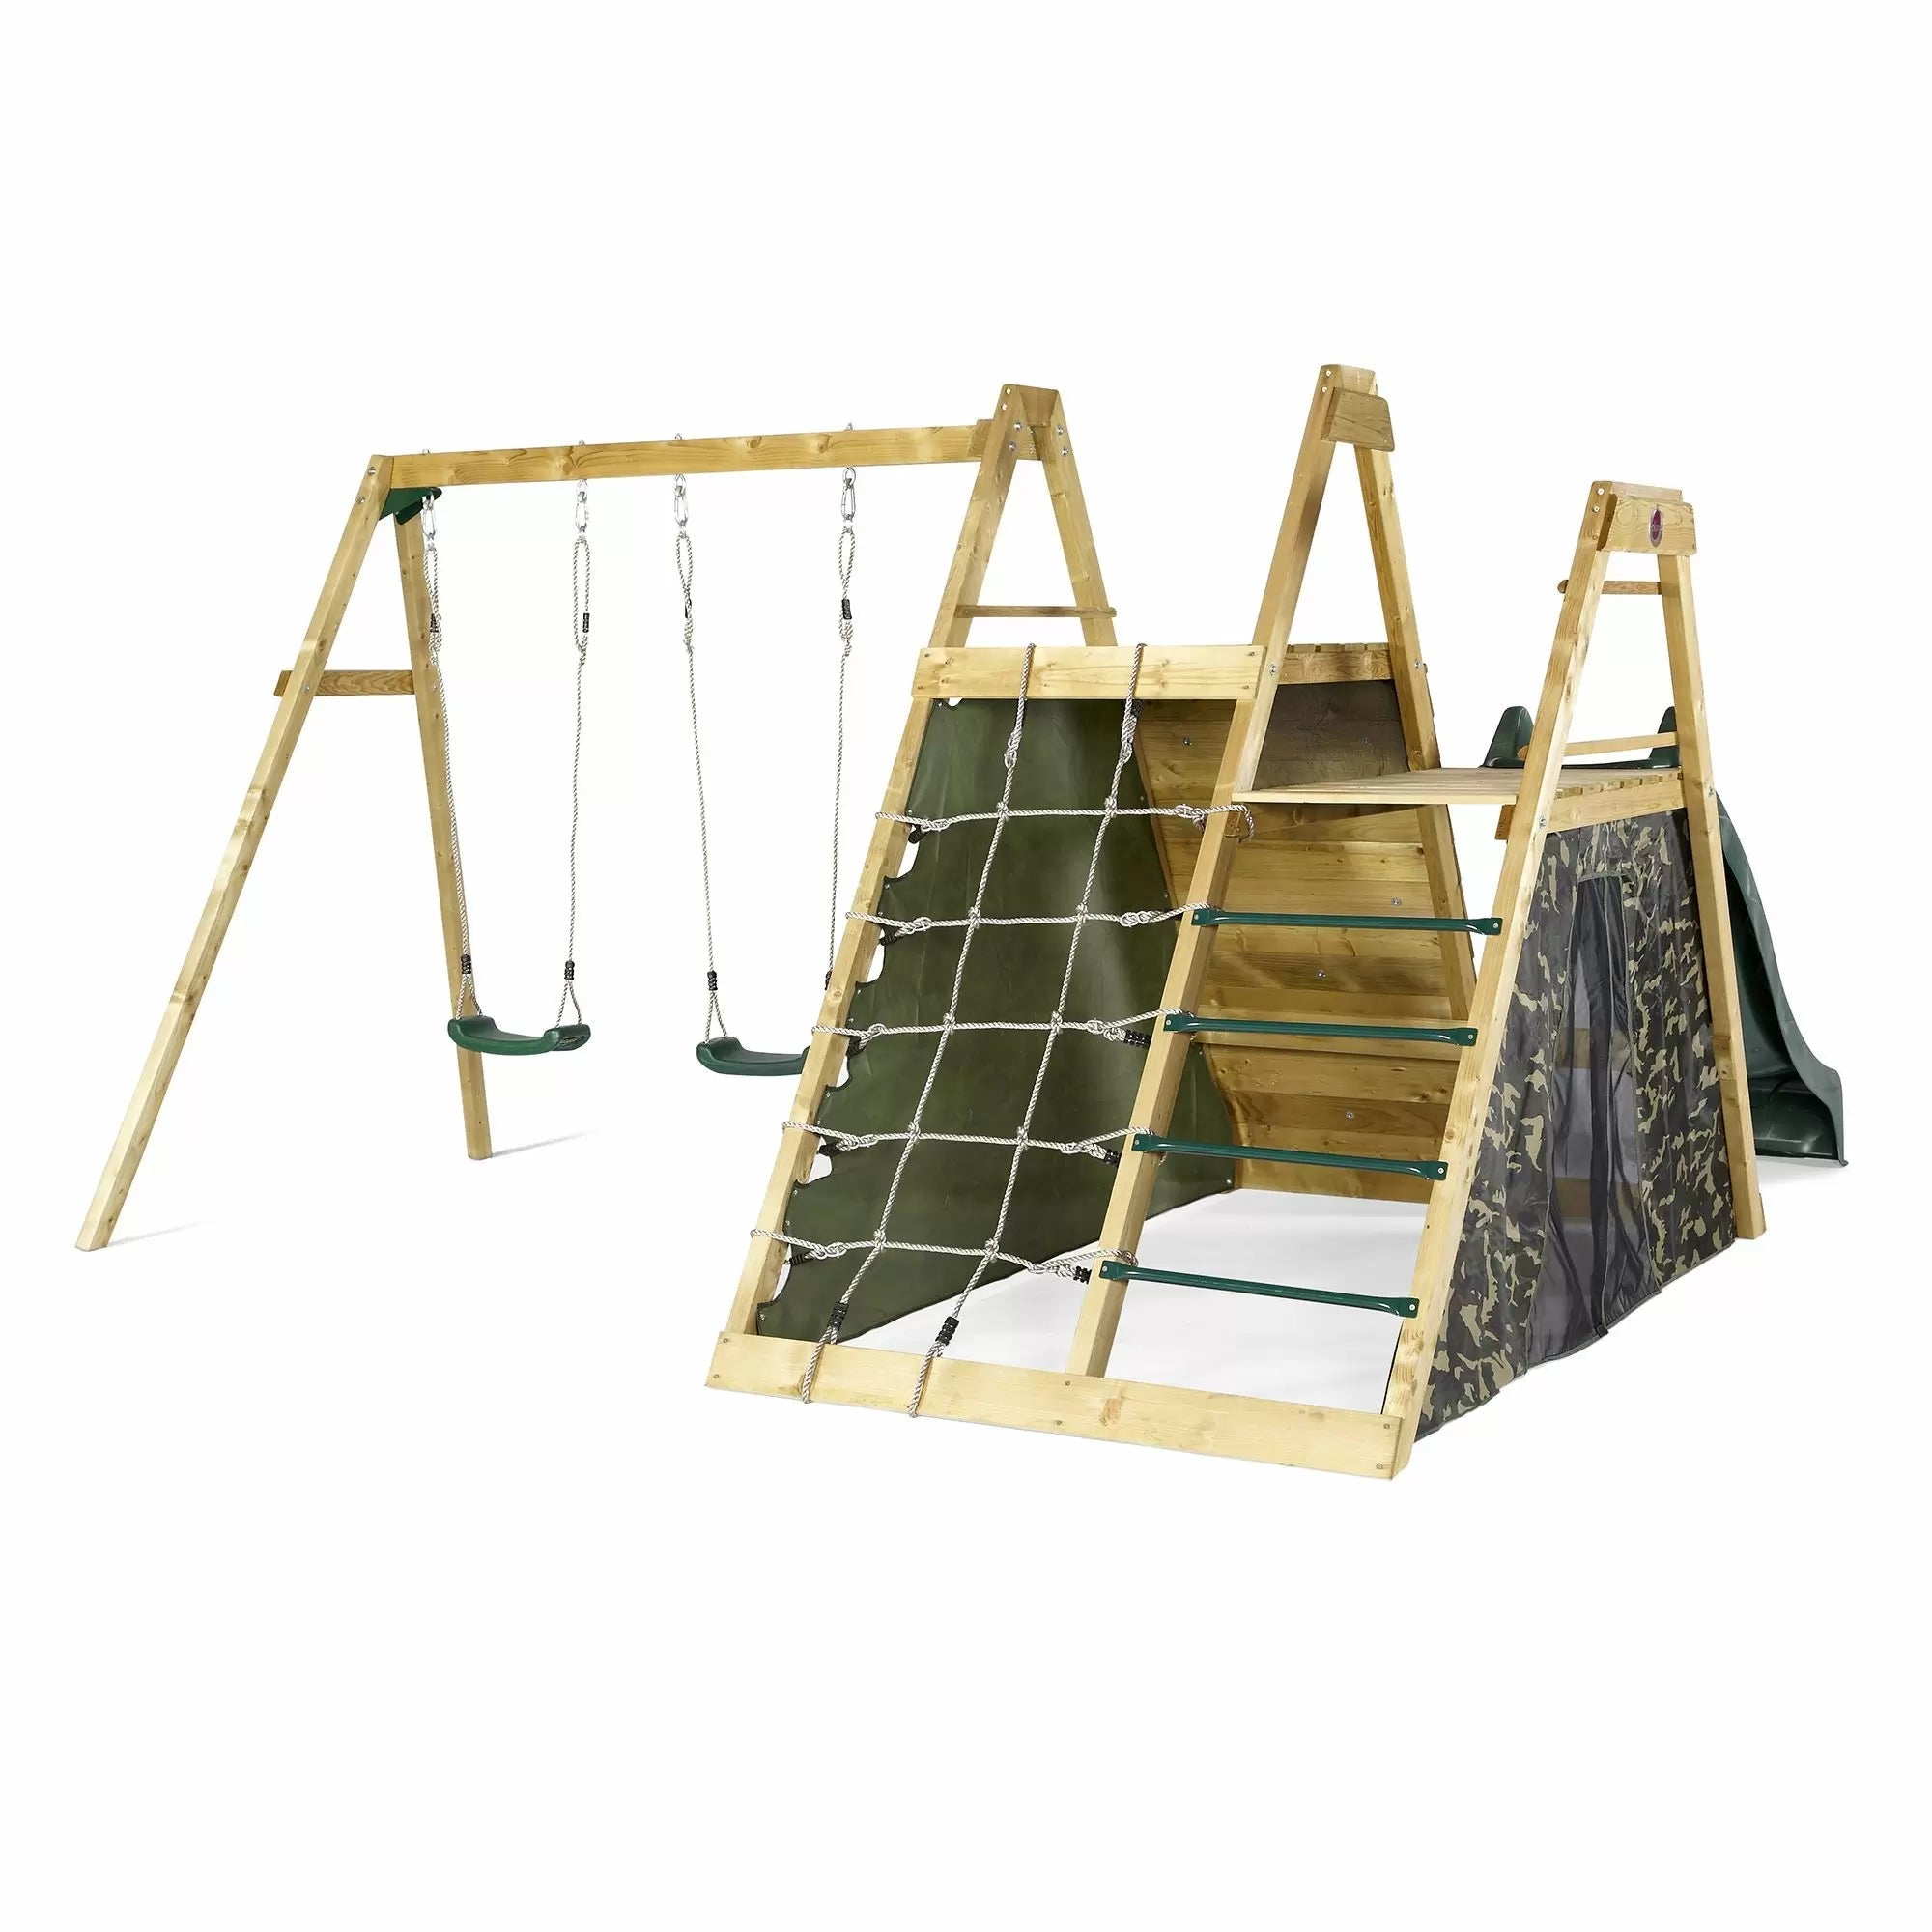 Plum Climbing Pyramid Play Centre Playground Equipment for Kids